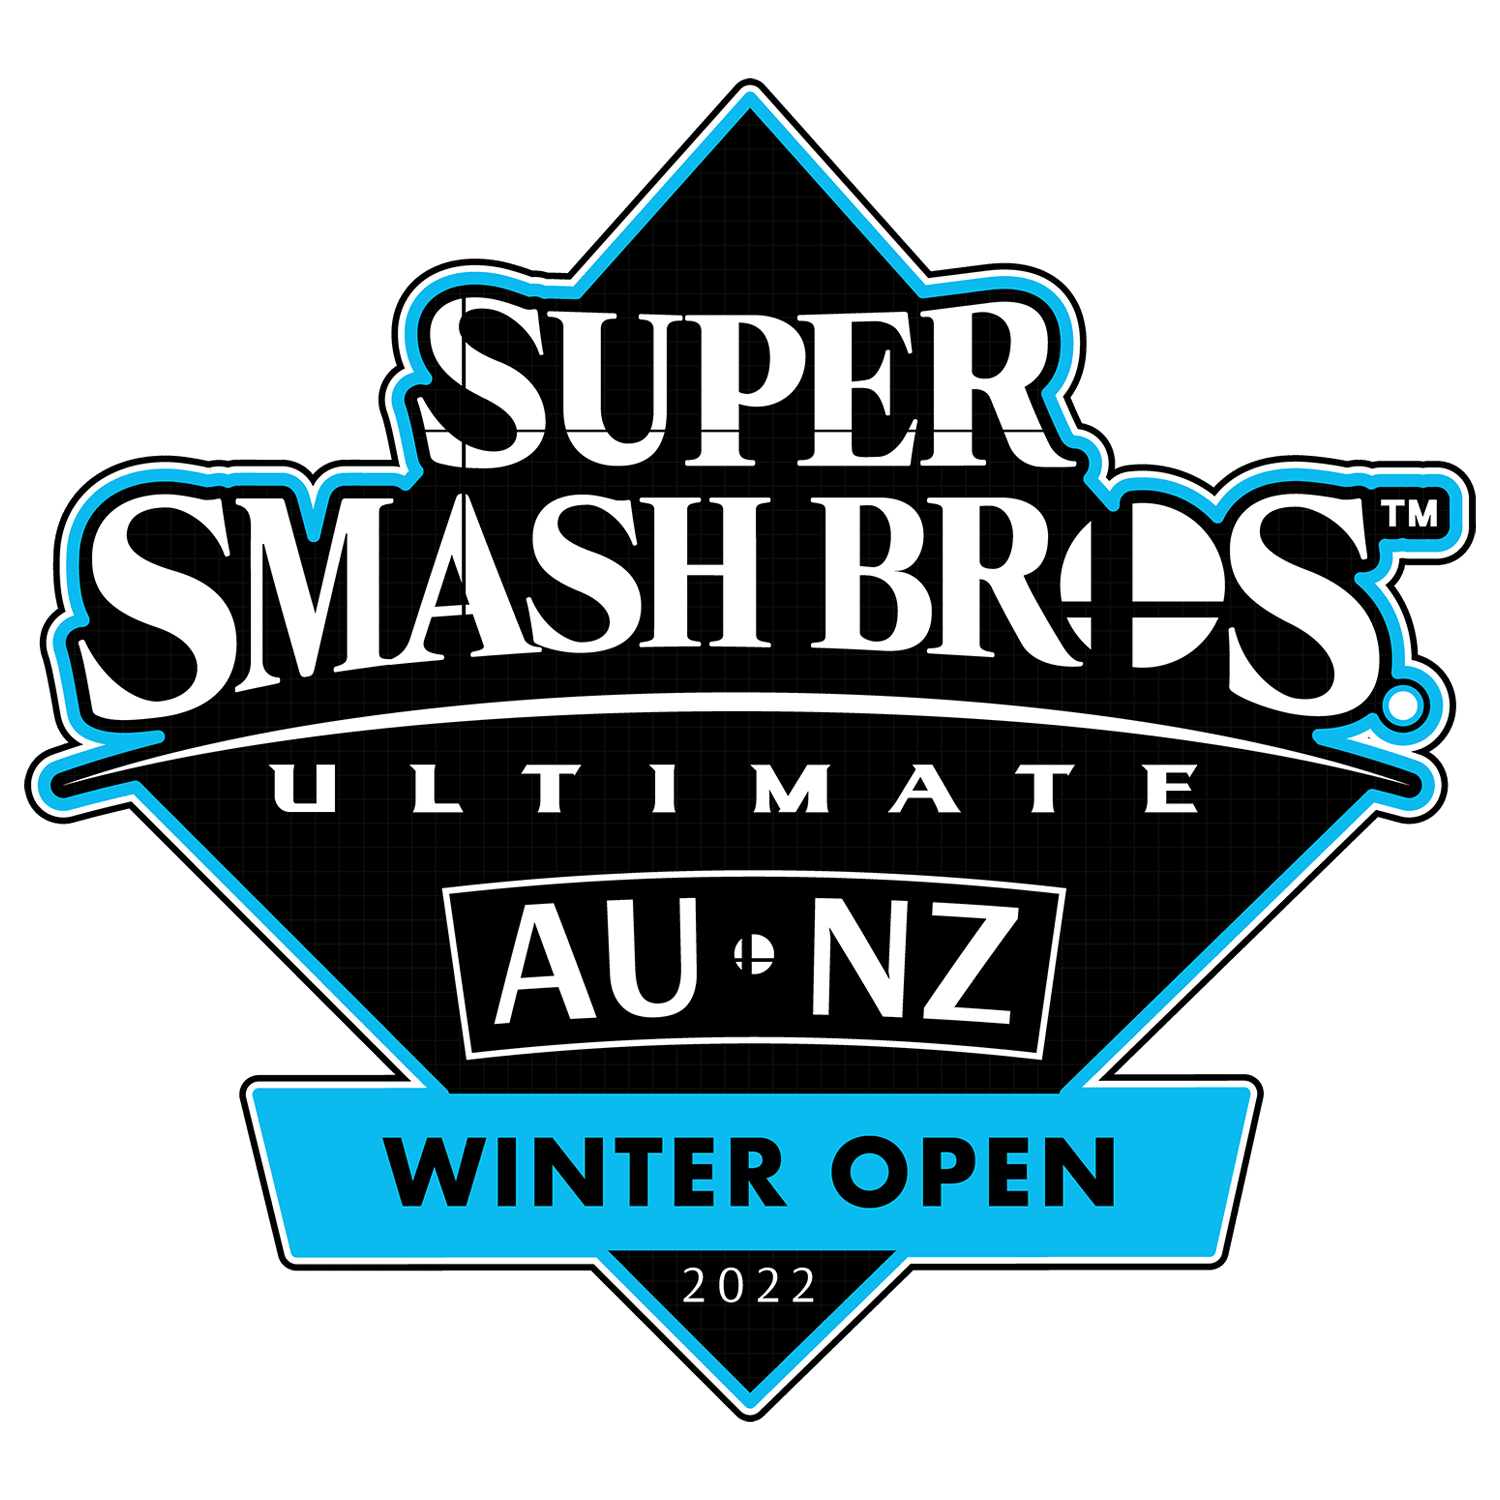 Super Smash Bros. Ultimate: AU/NZ Autumn Open